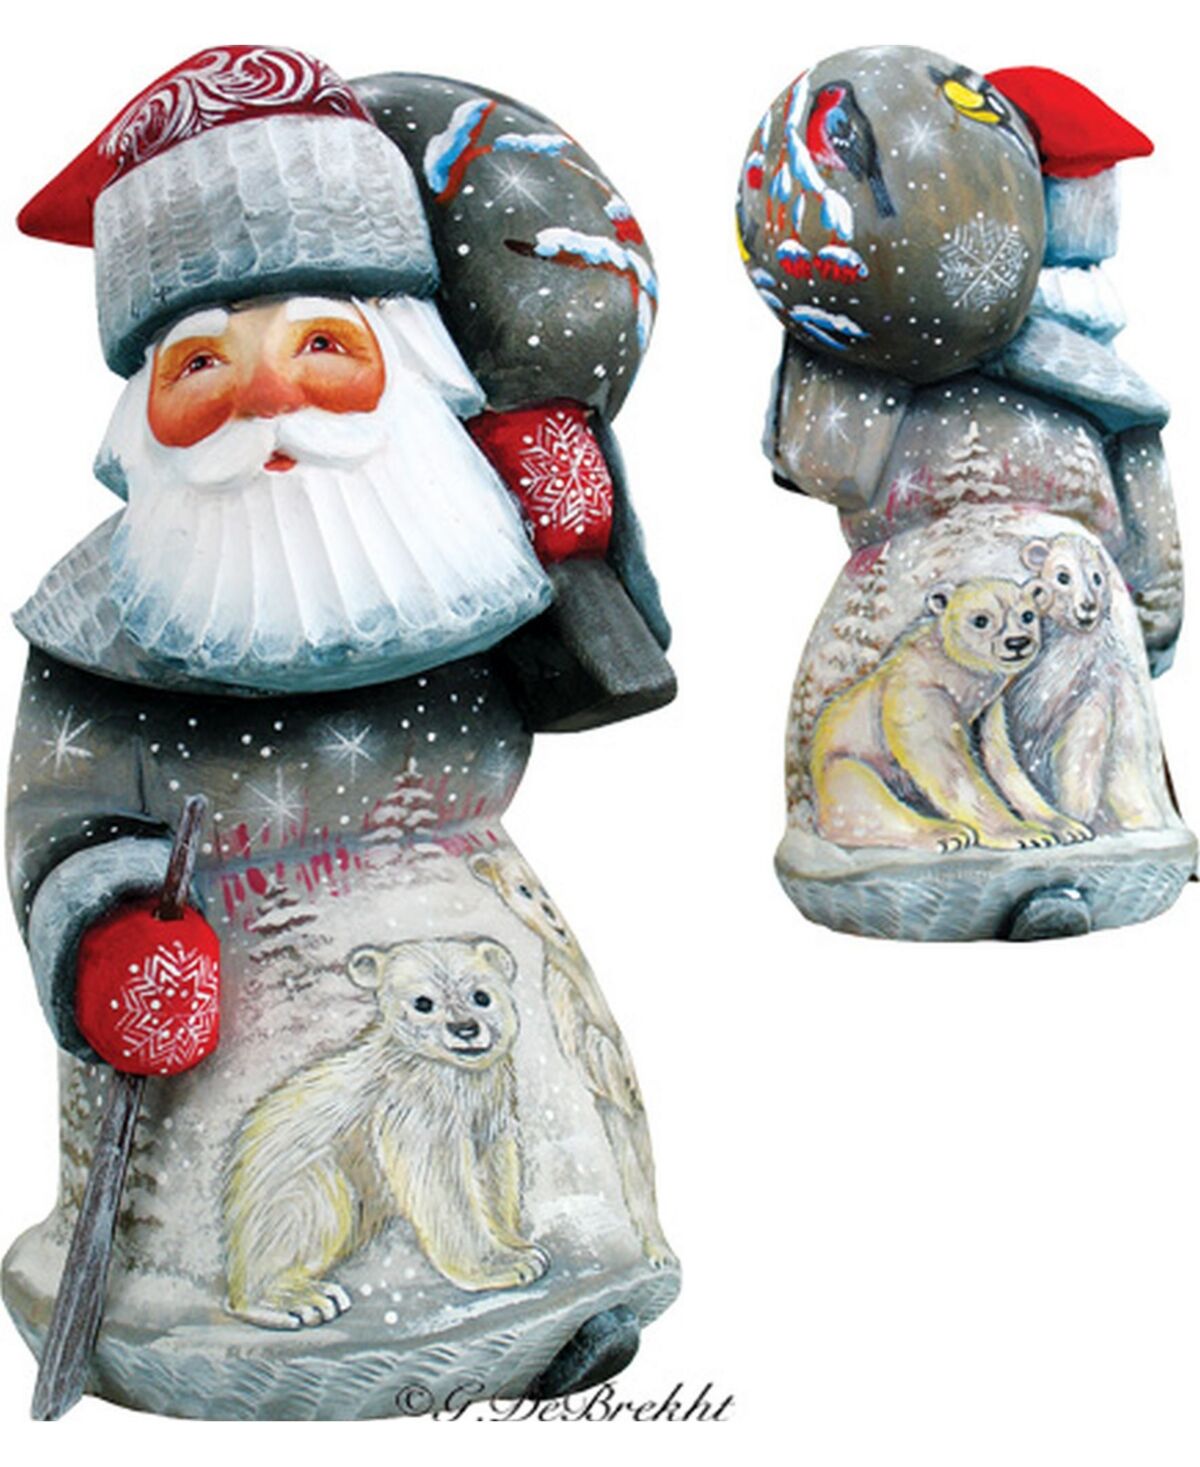 G.DeBrekht Woodcarved and Hand Painted Delightful Polar Bear Santa Figurine - Multi